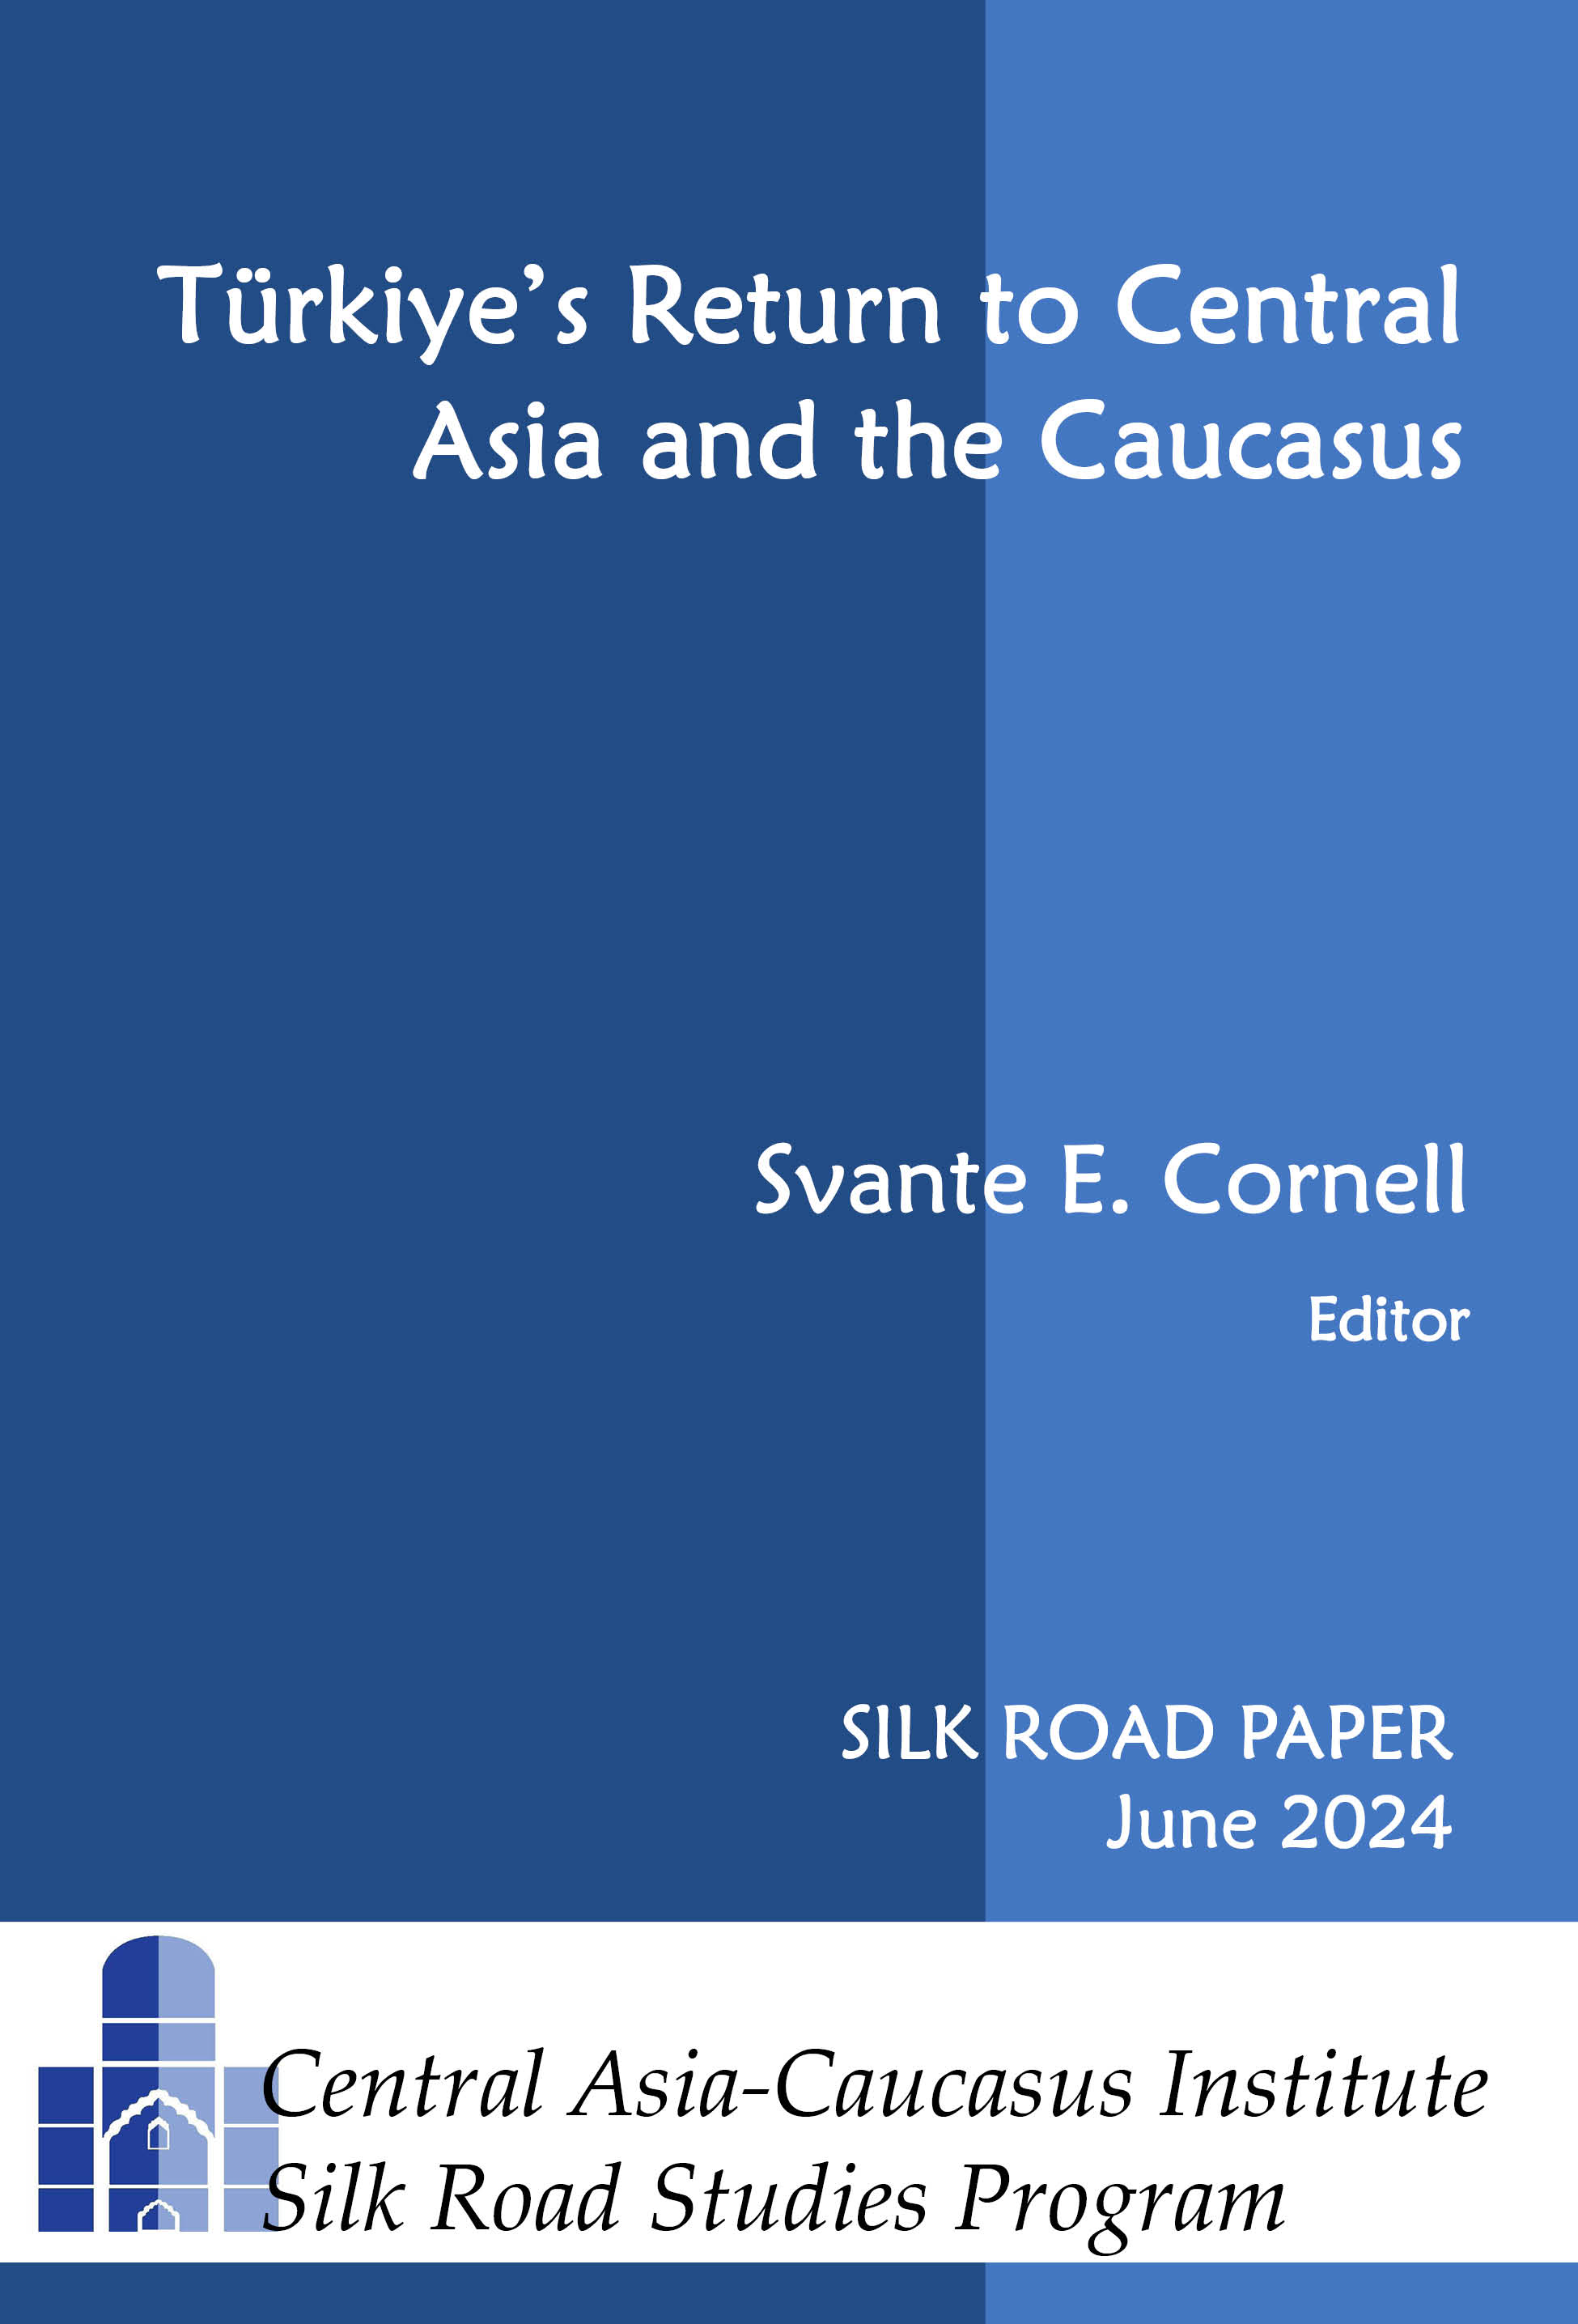 Silk Road Paper cover-8